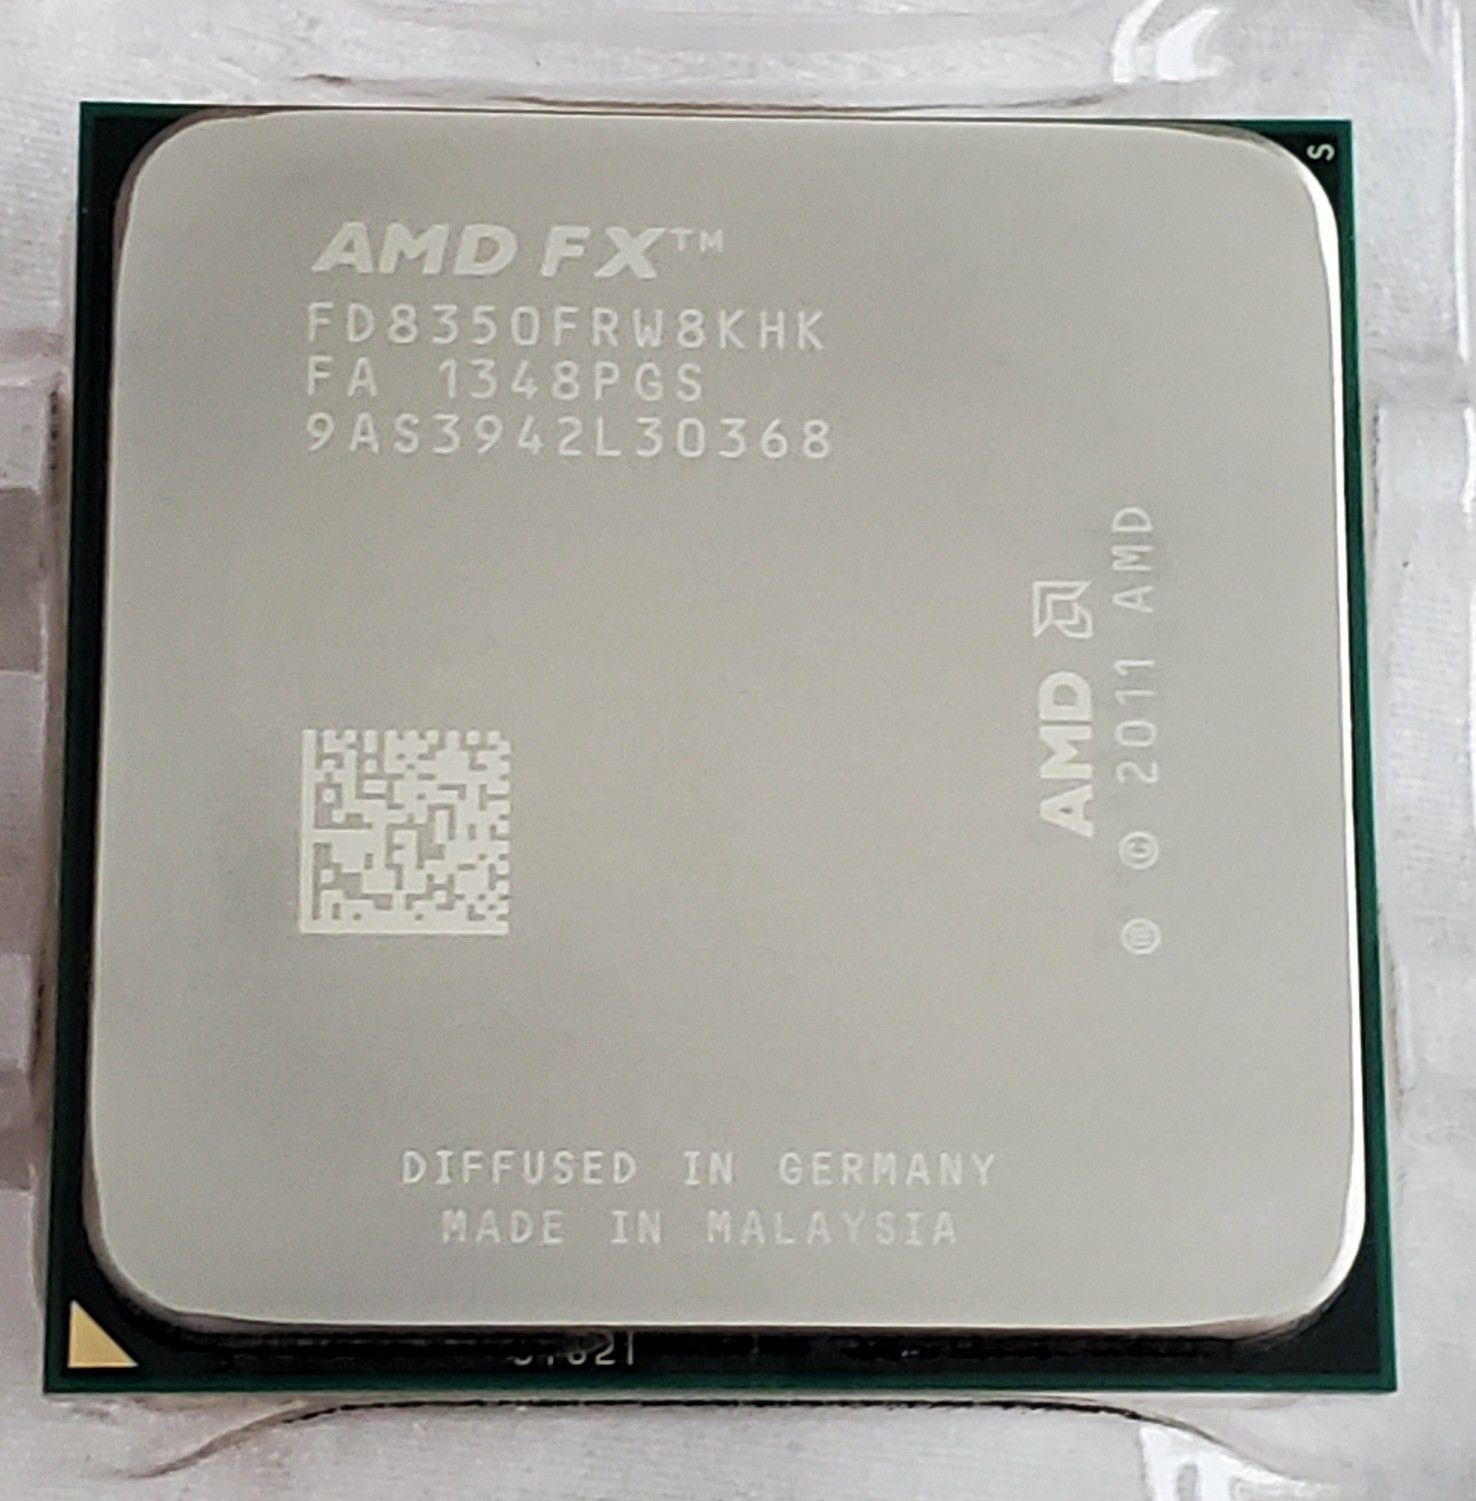 AMD FX-8350 Black Edition CPU (AM3+)